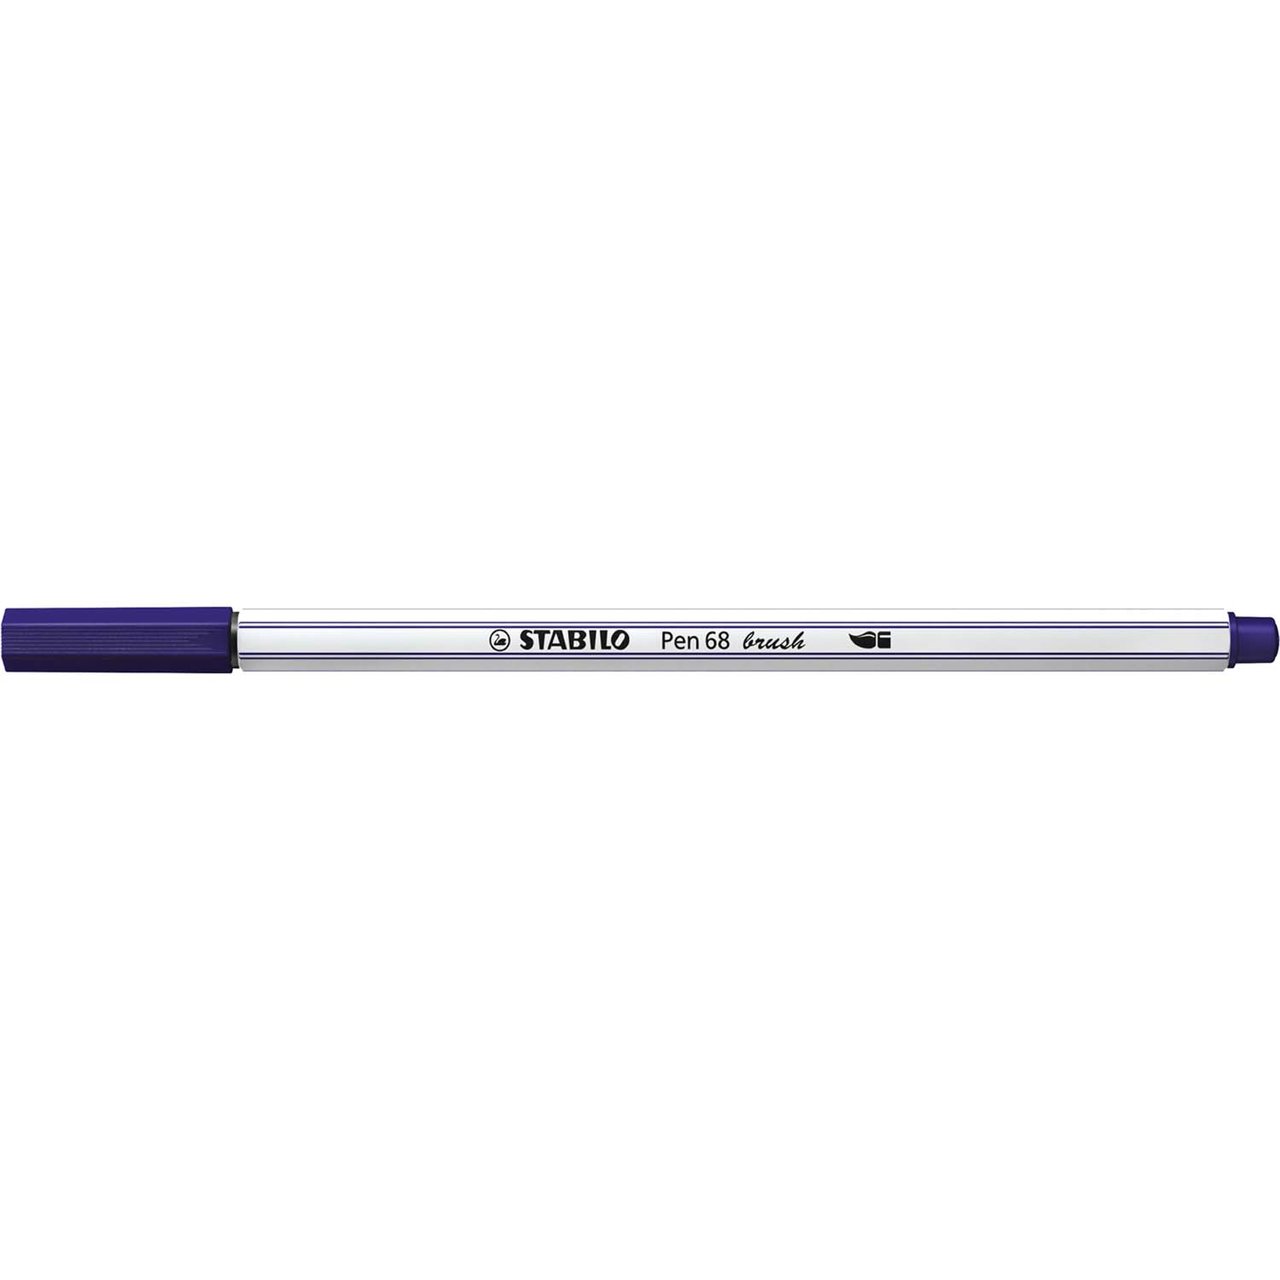 STABILO Pen 68 brush preussischblau